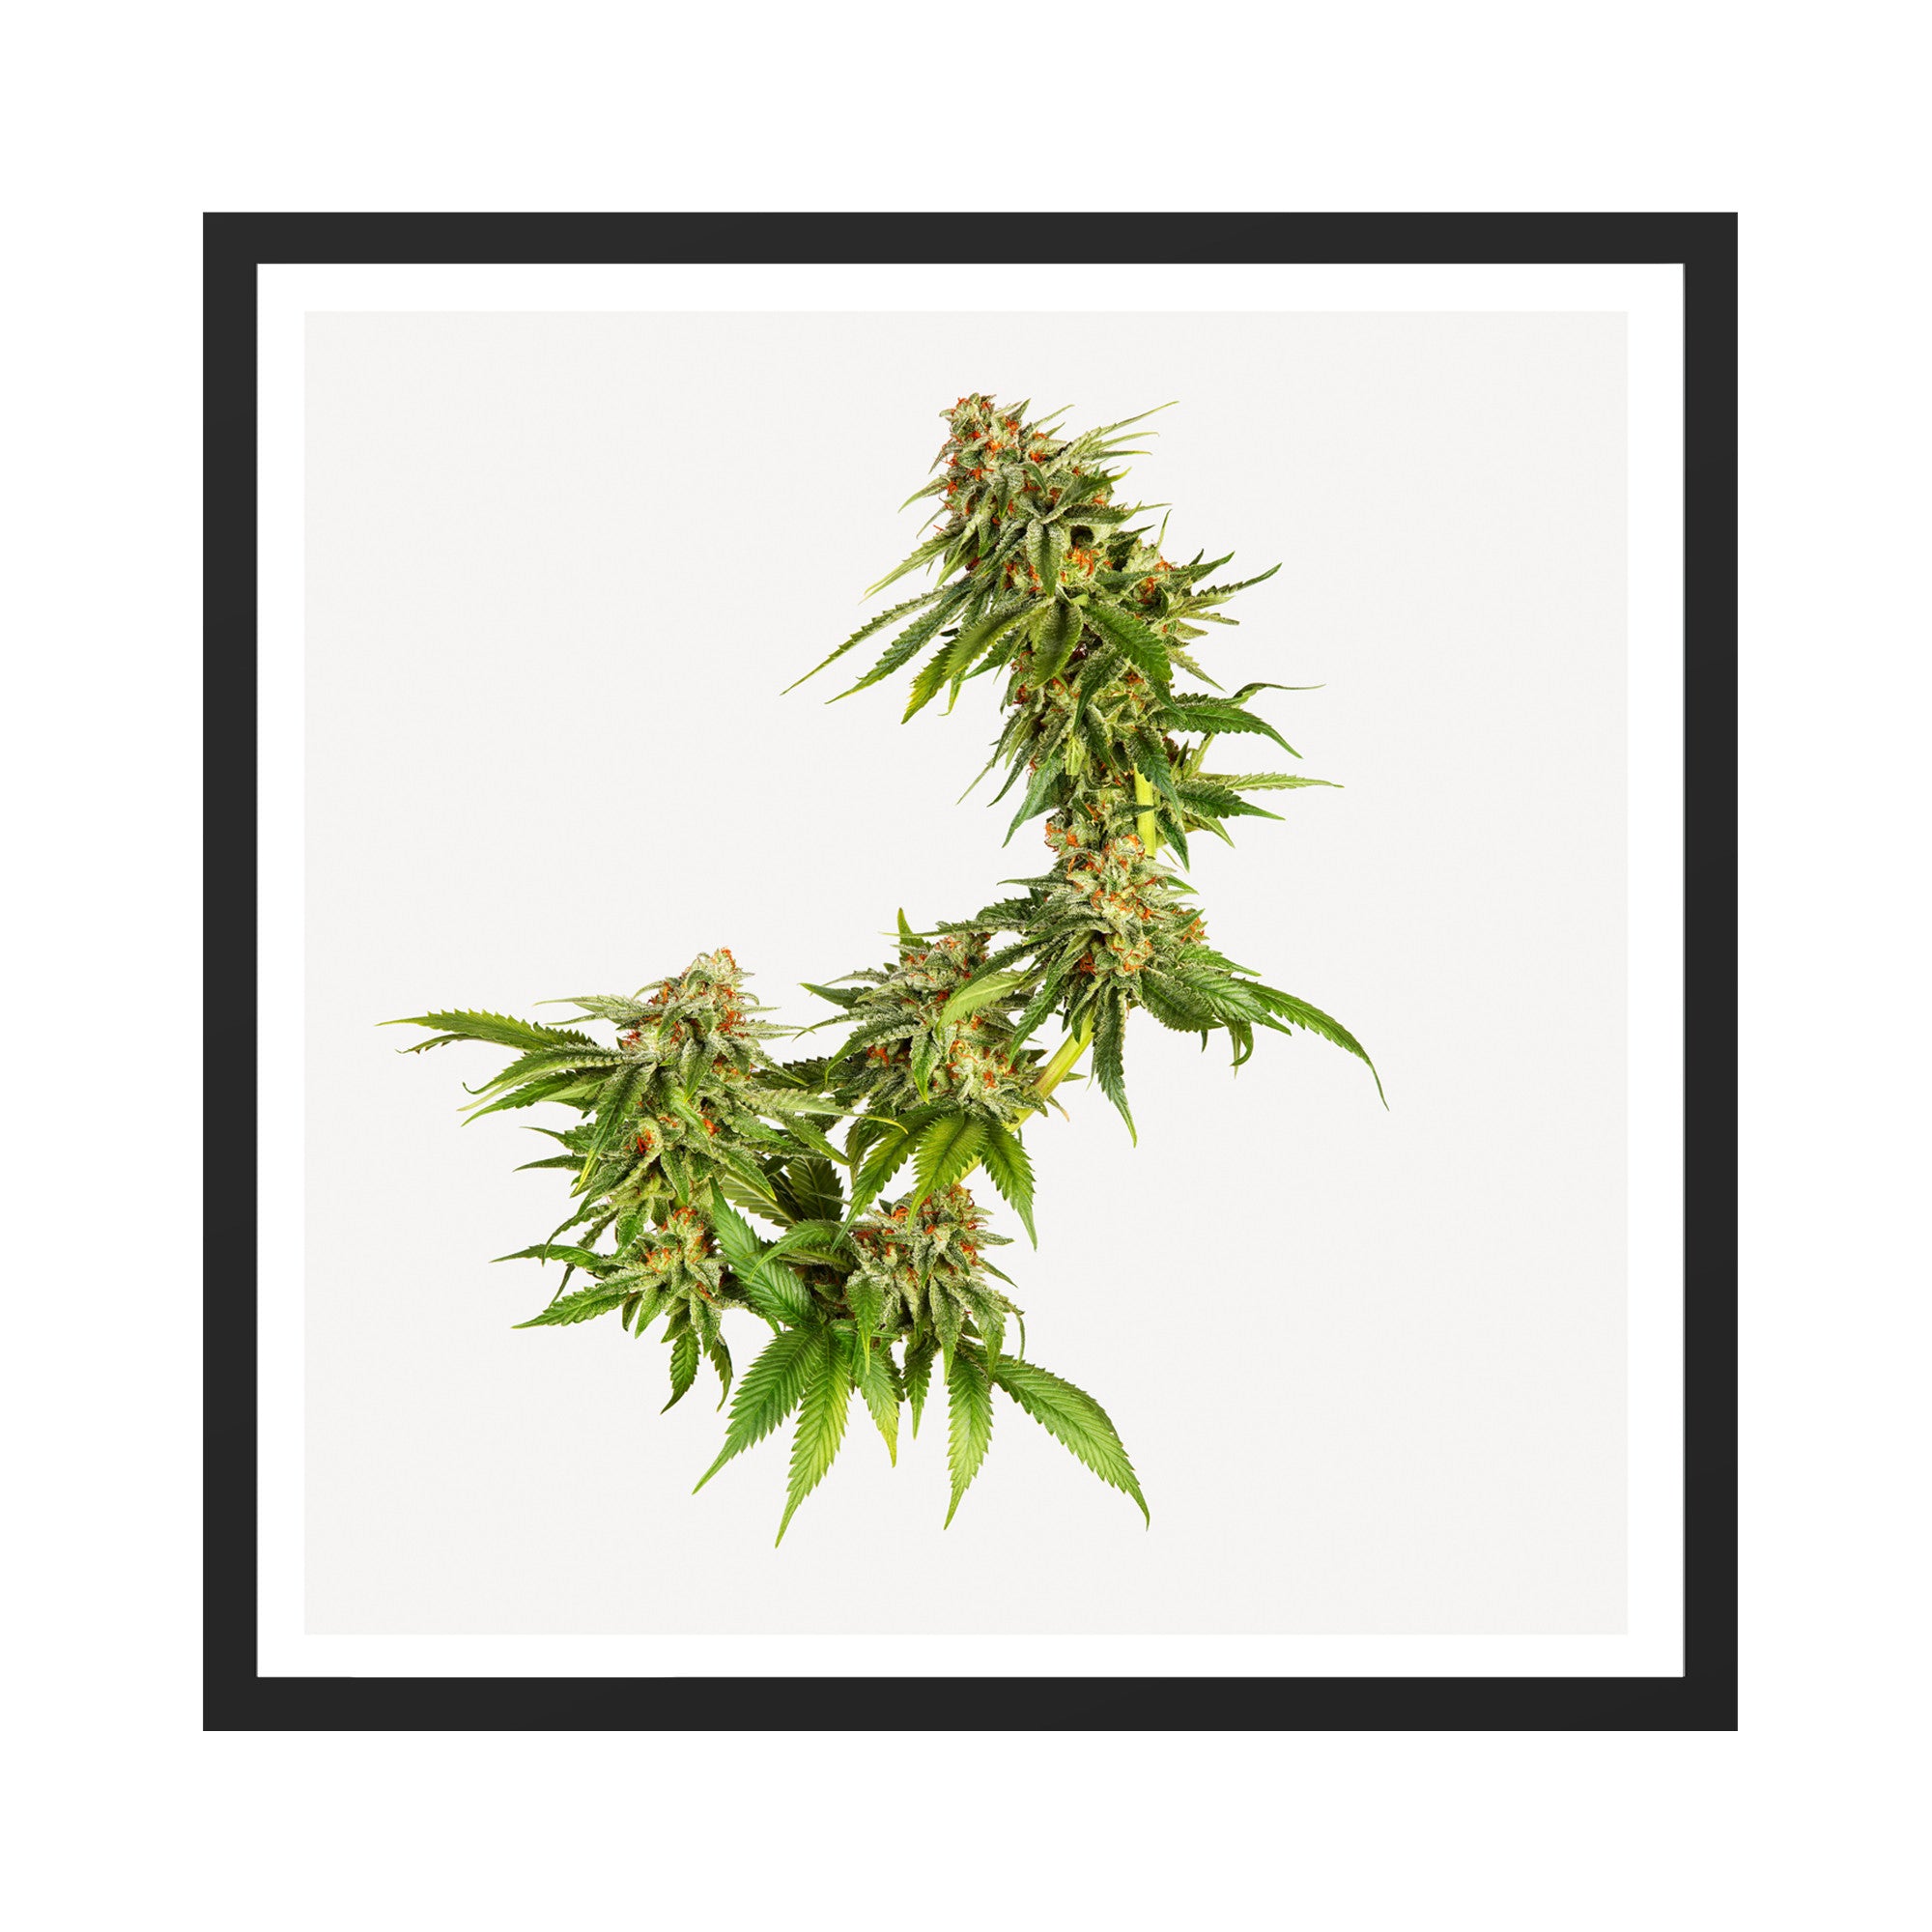 Cannabis sativa sp. Indica cultivar